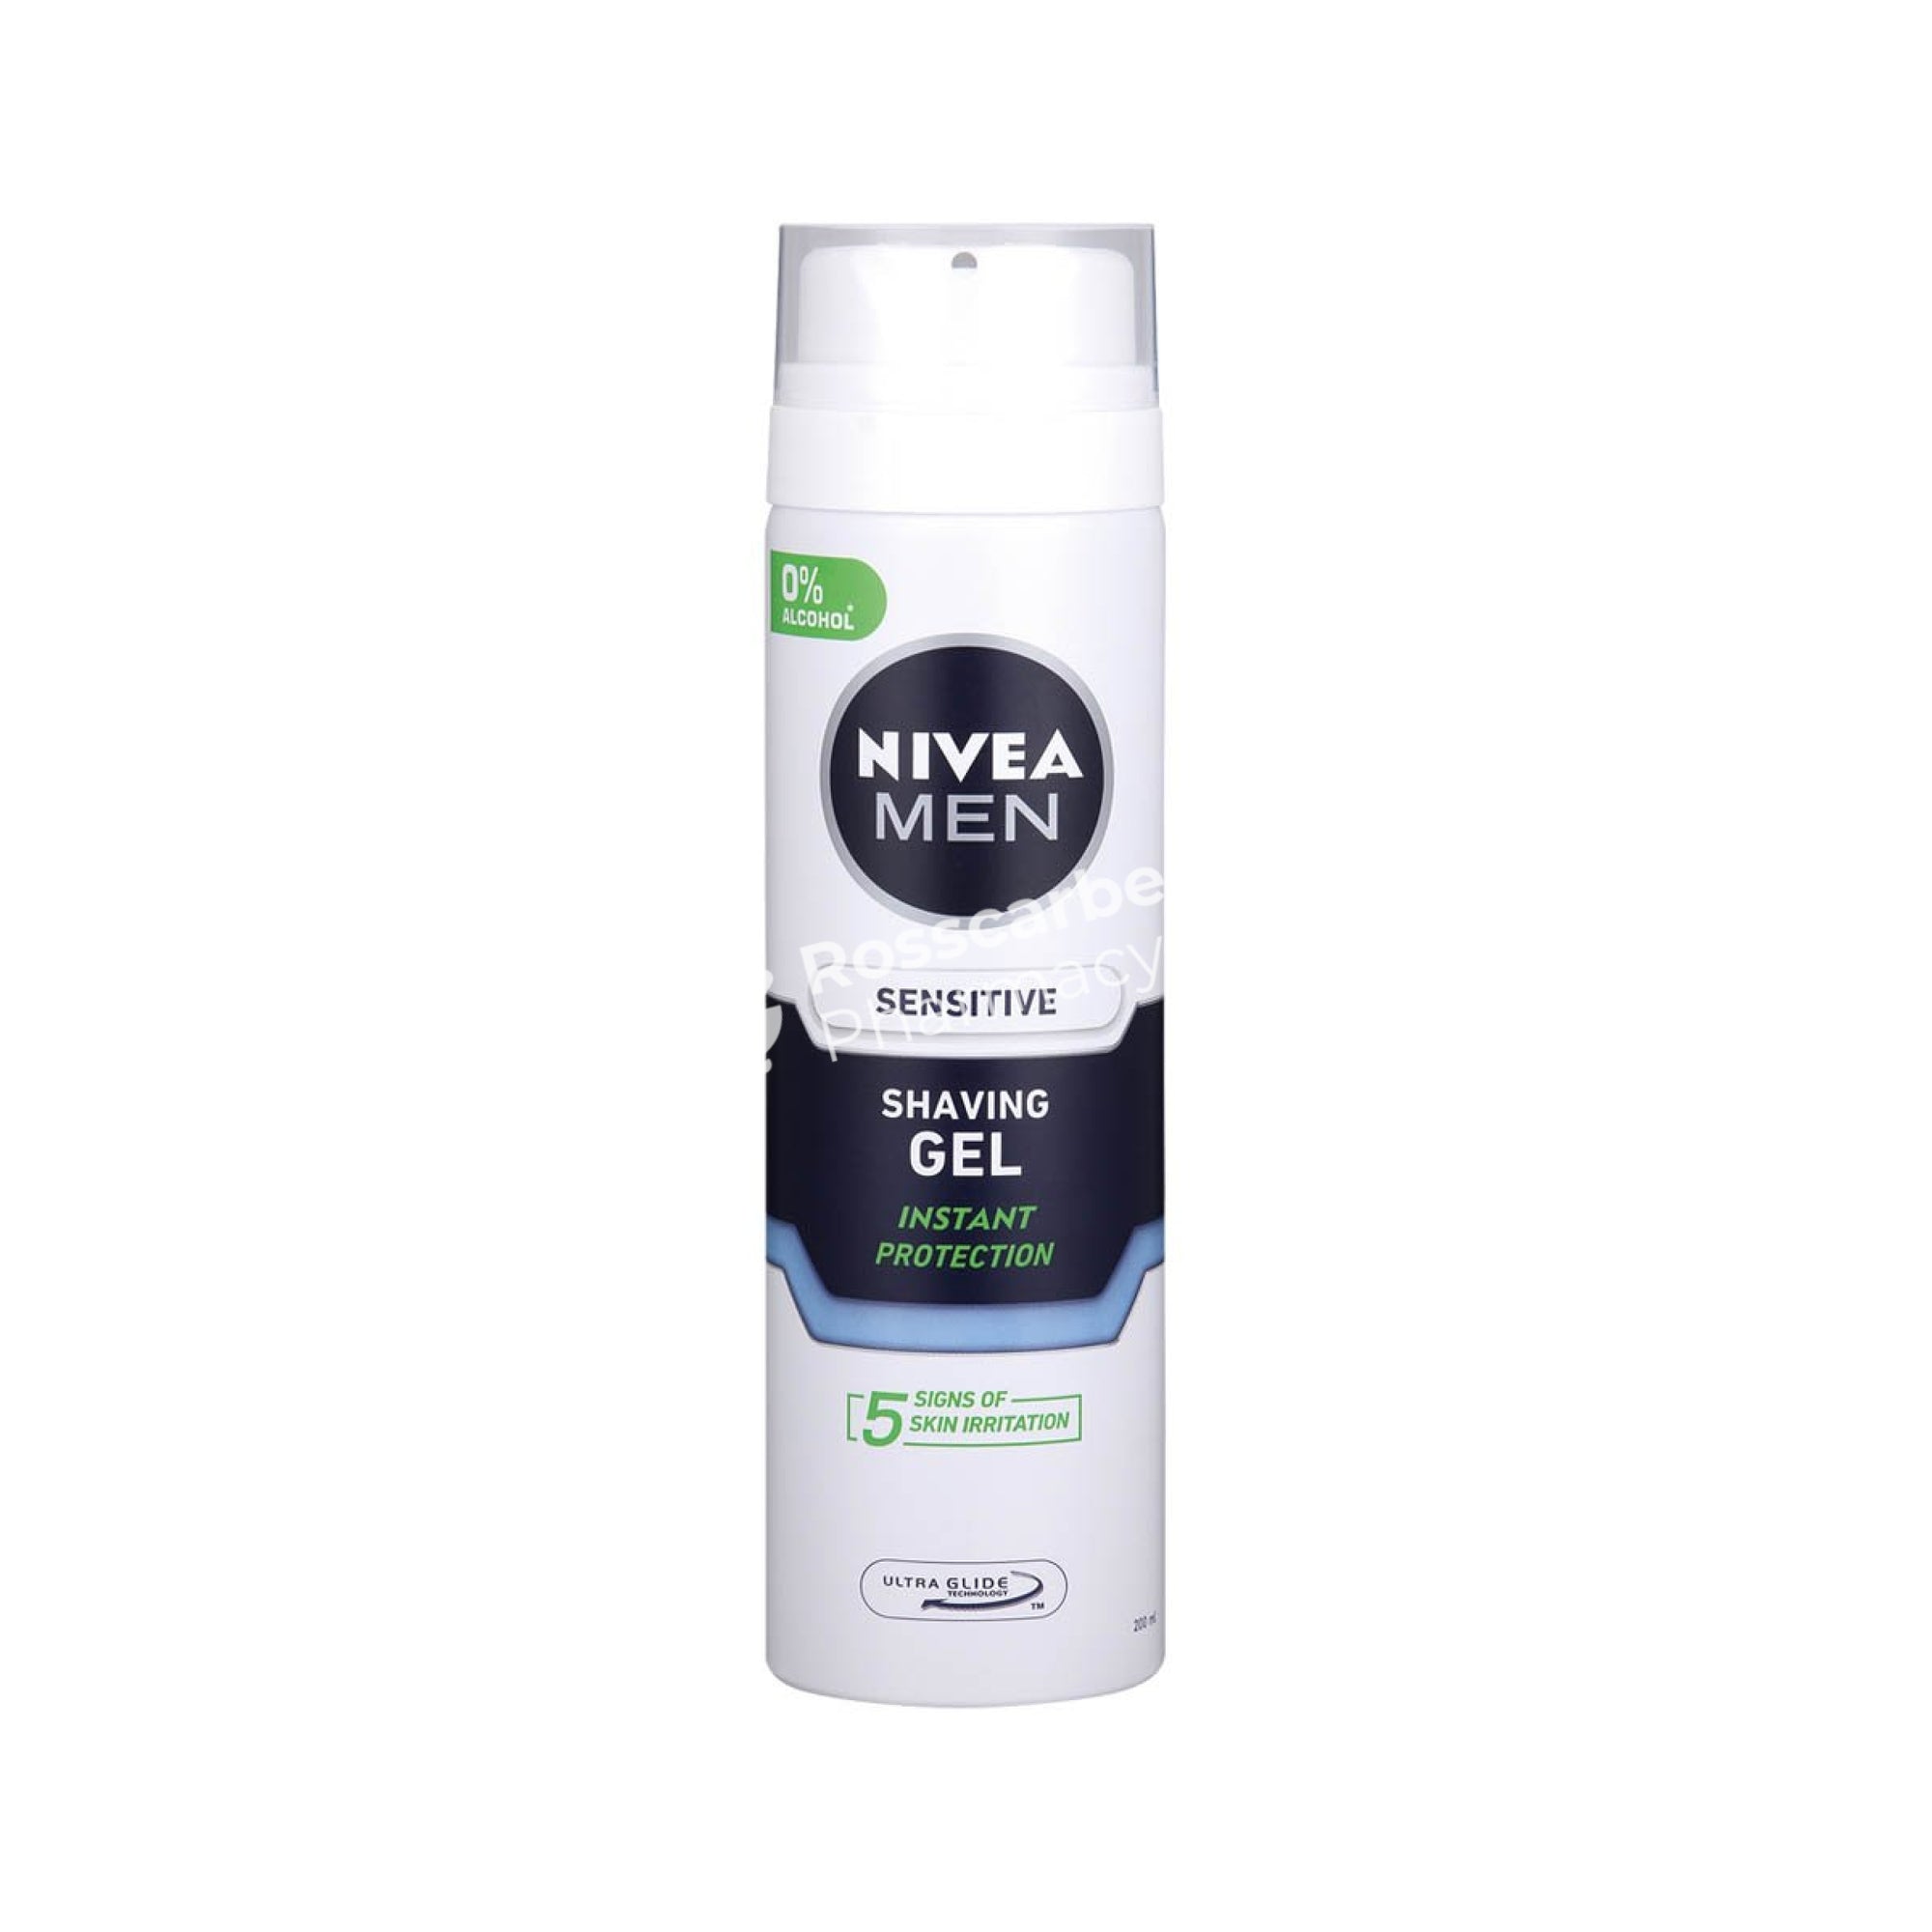 Nivea Men Sensitive Shaving Gel Instant Protection Mens & Grooming